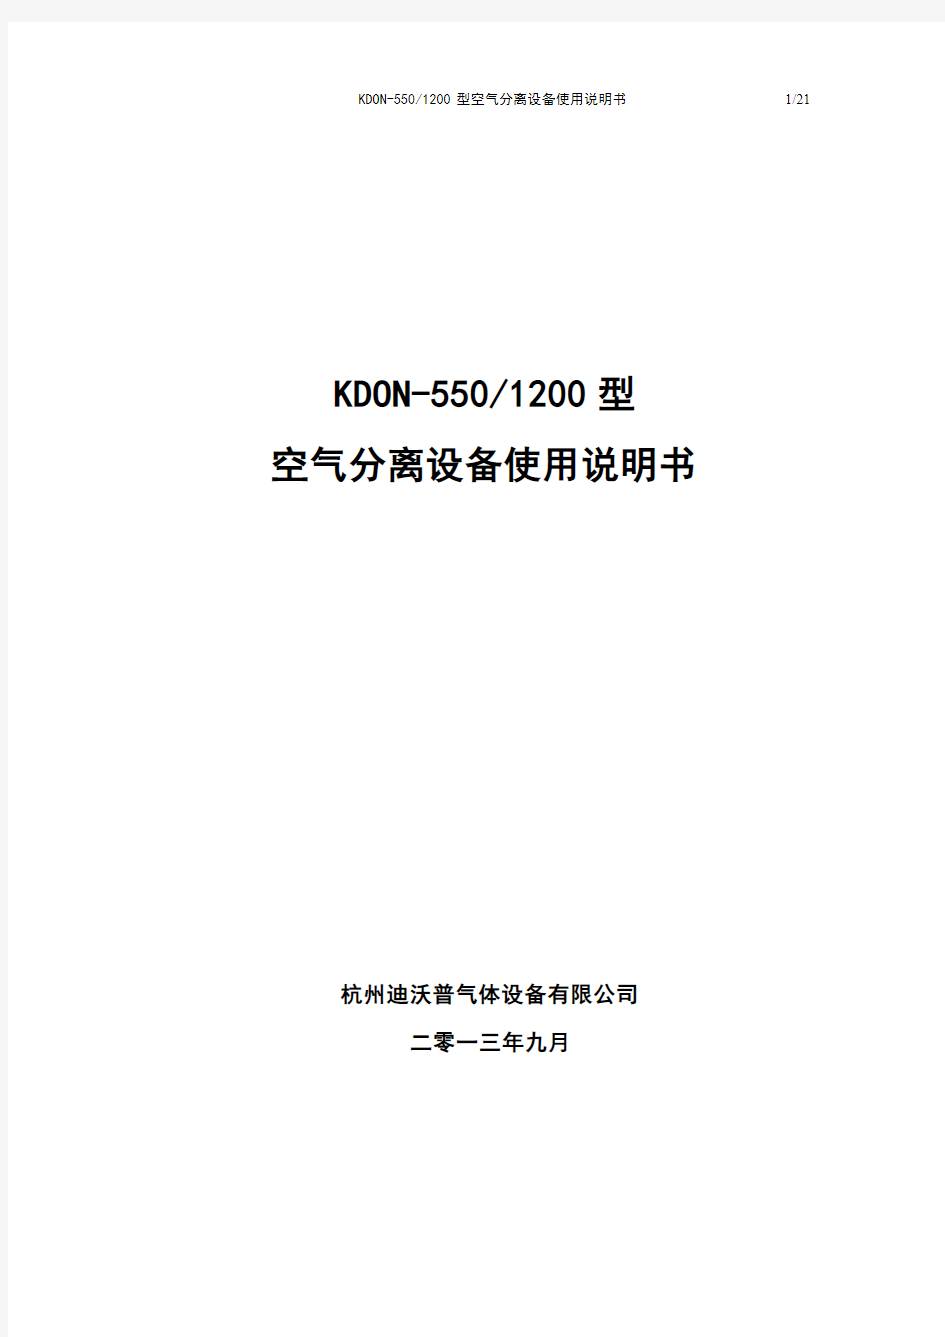 KDON550-1200空分说明书